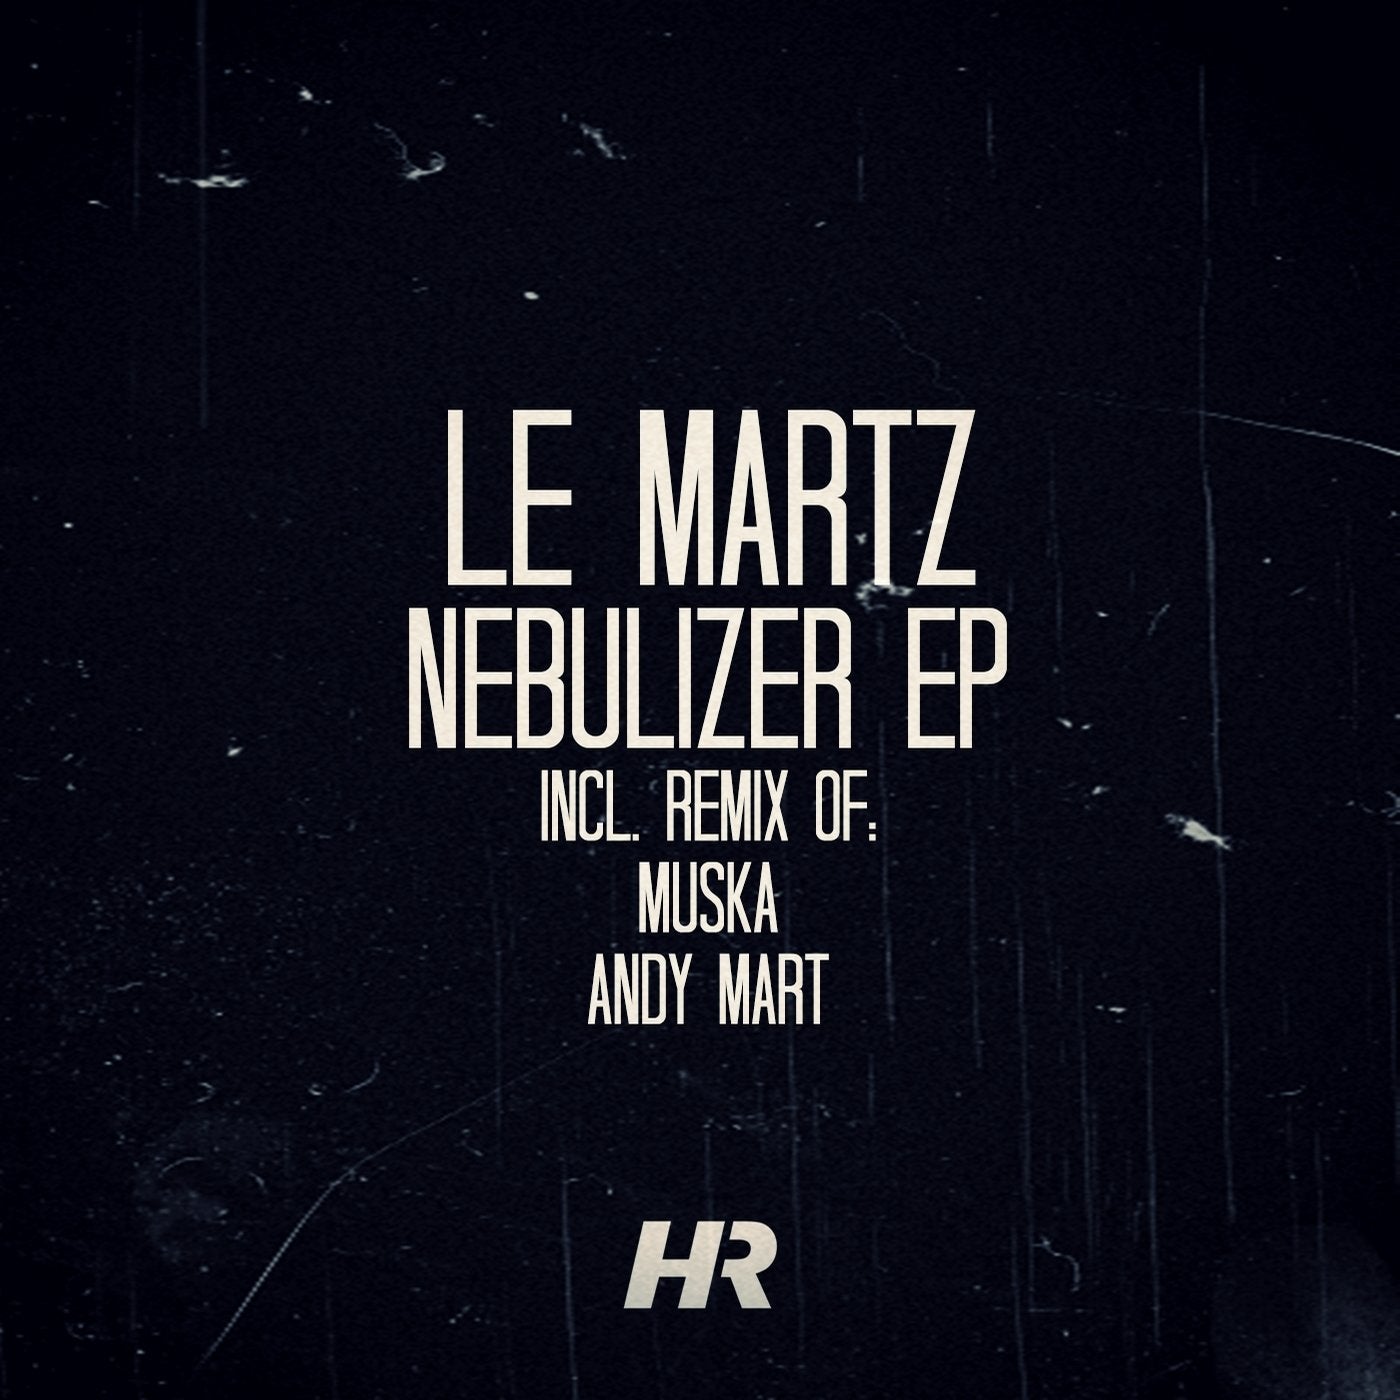 Nebulizer EP